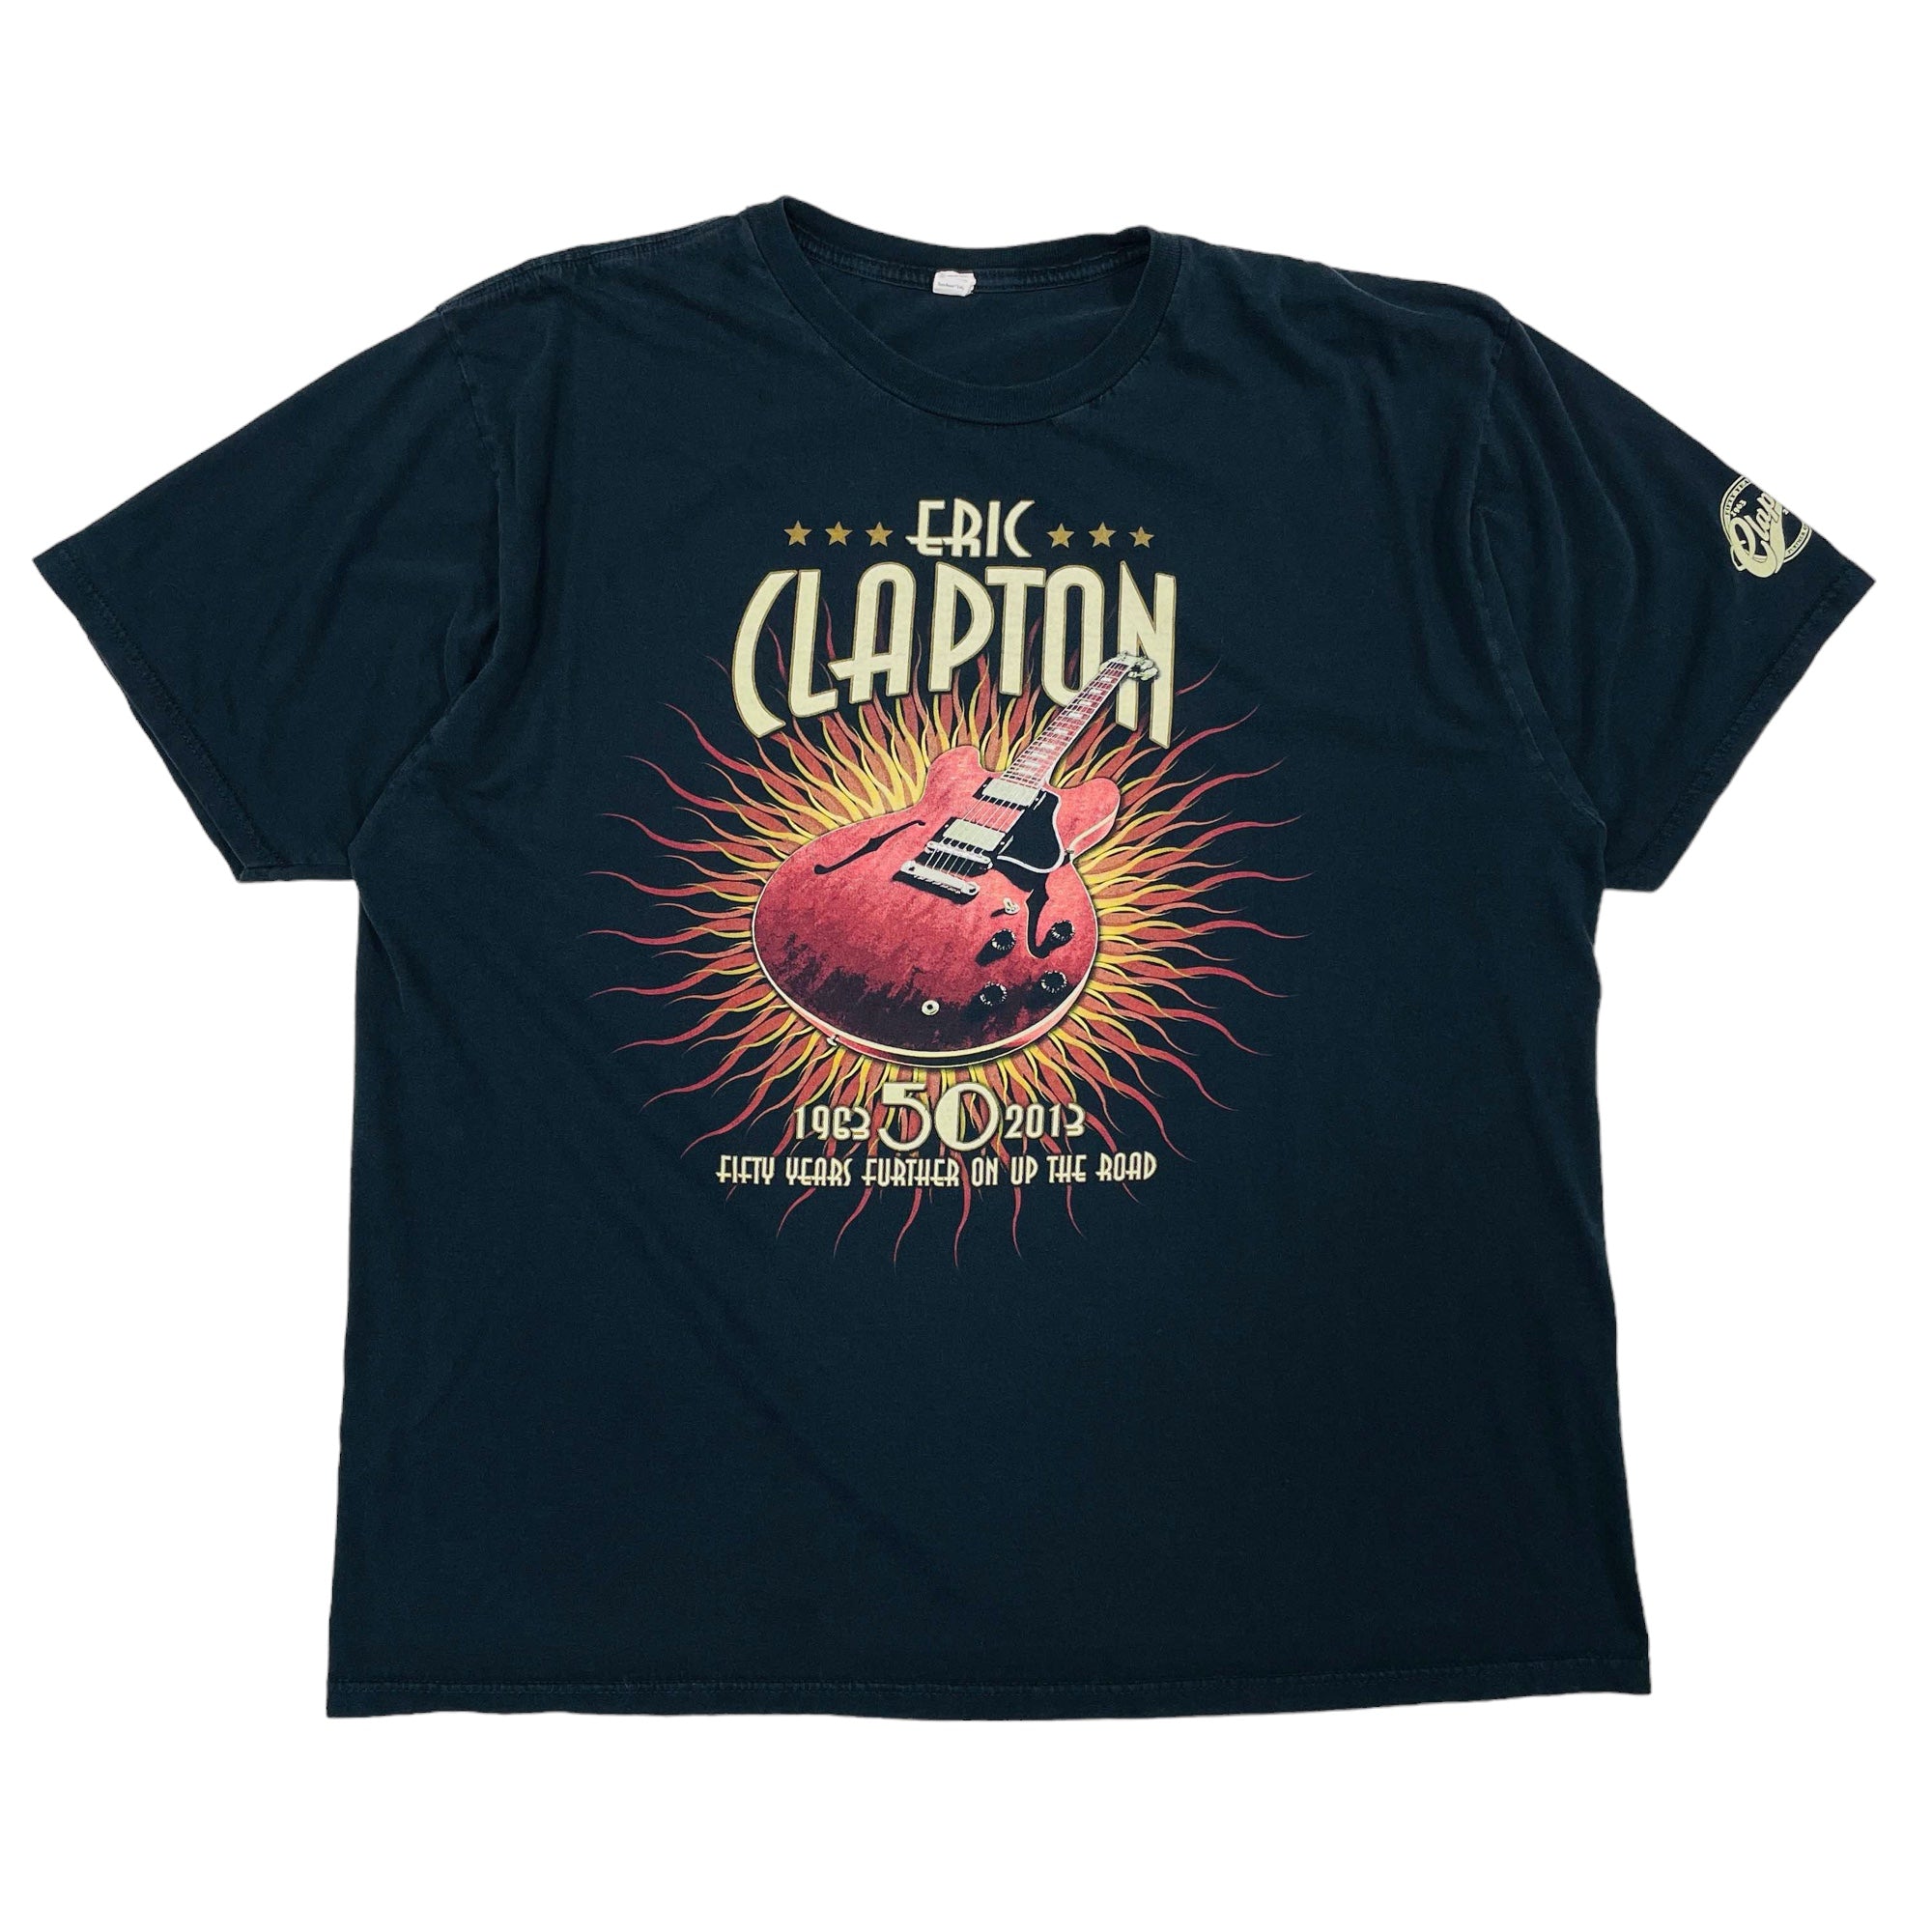 Eric Clapton 2013 Tour T-Shirt - 2XL